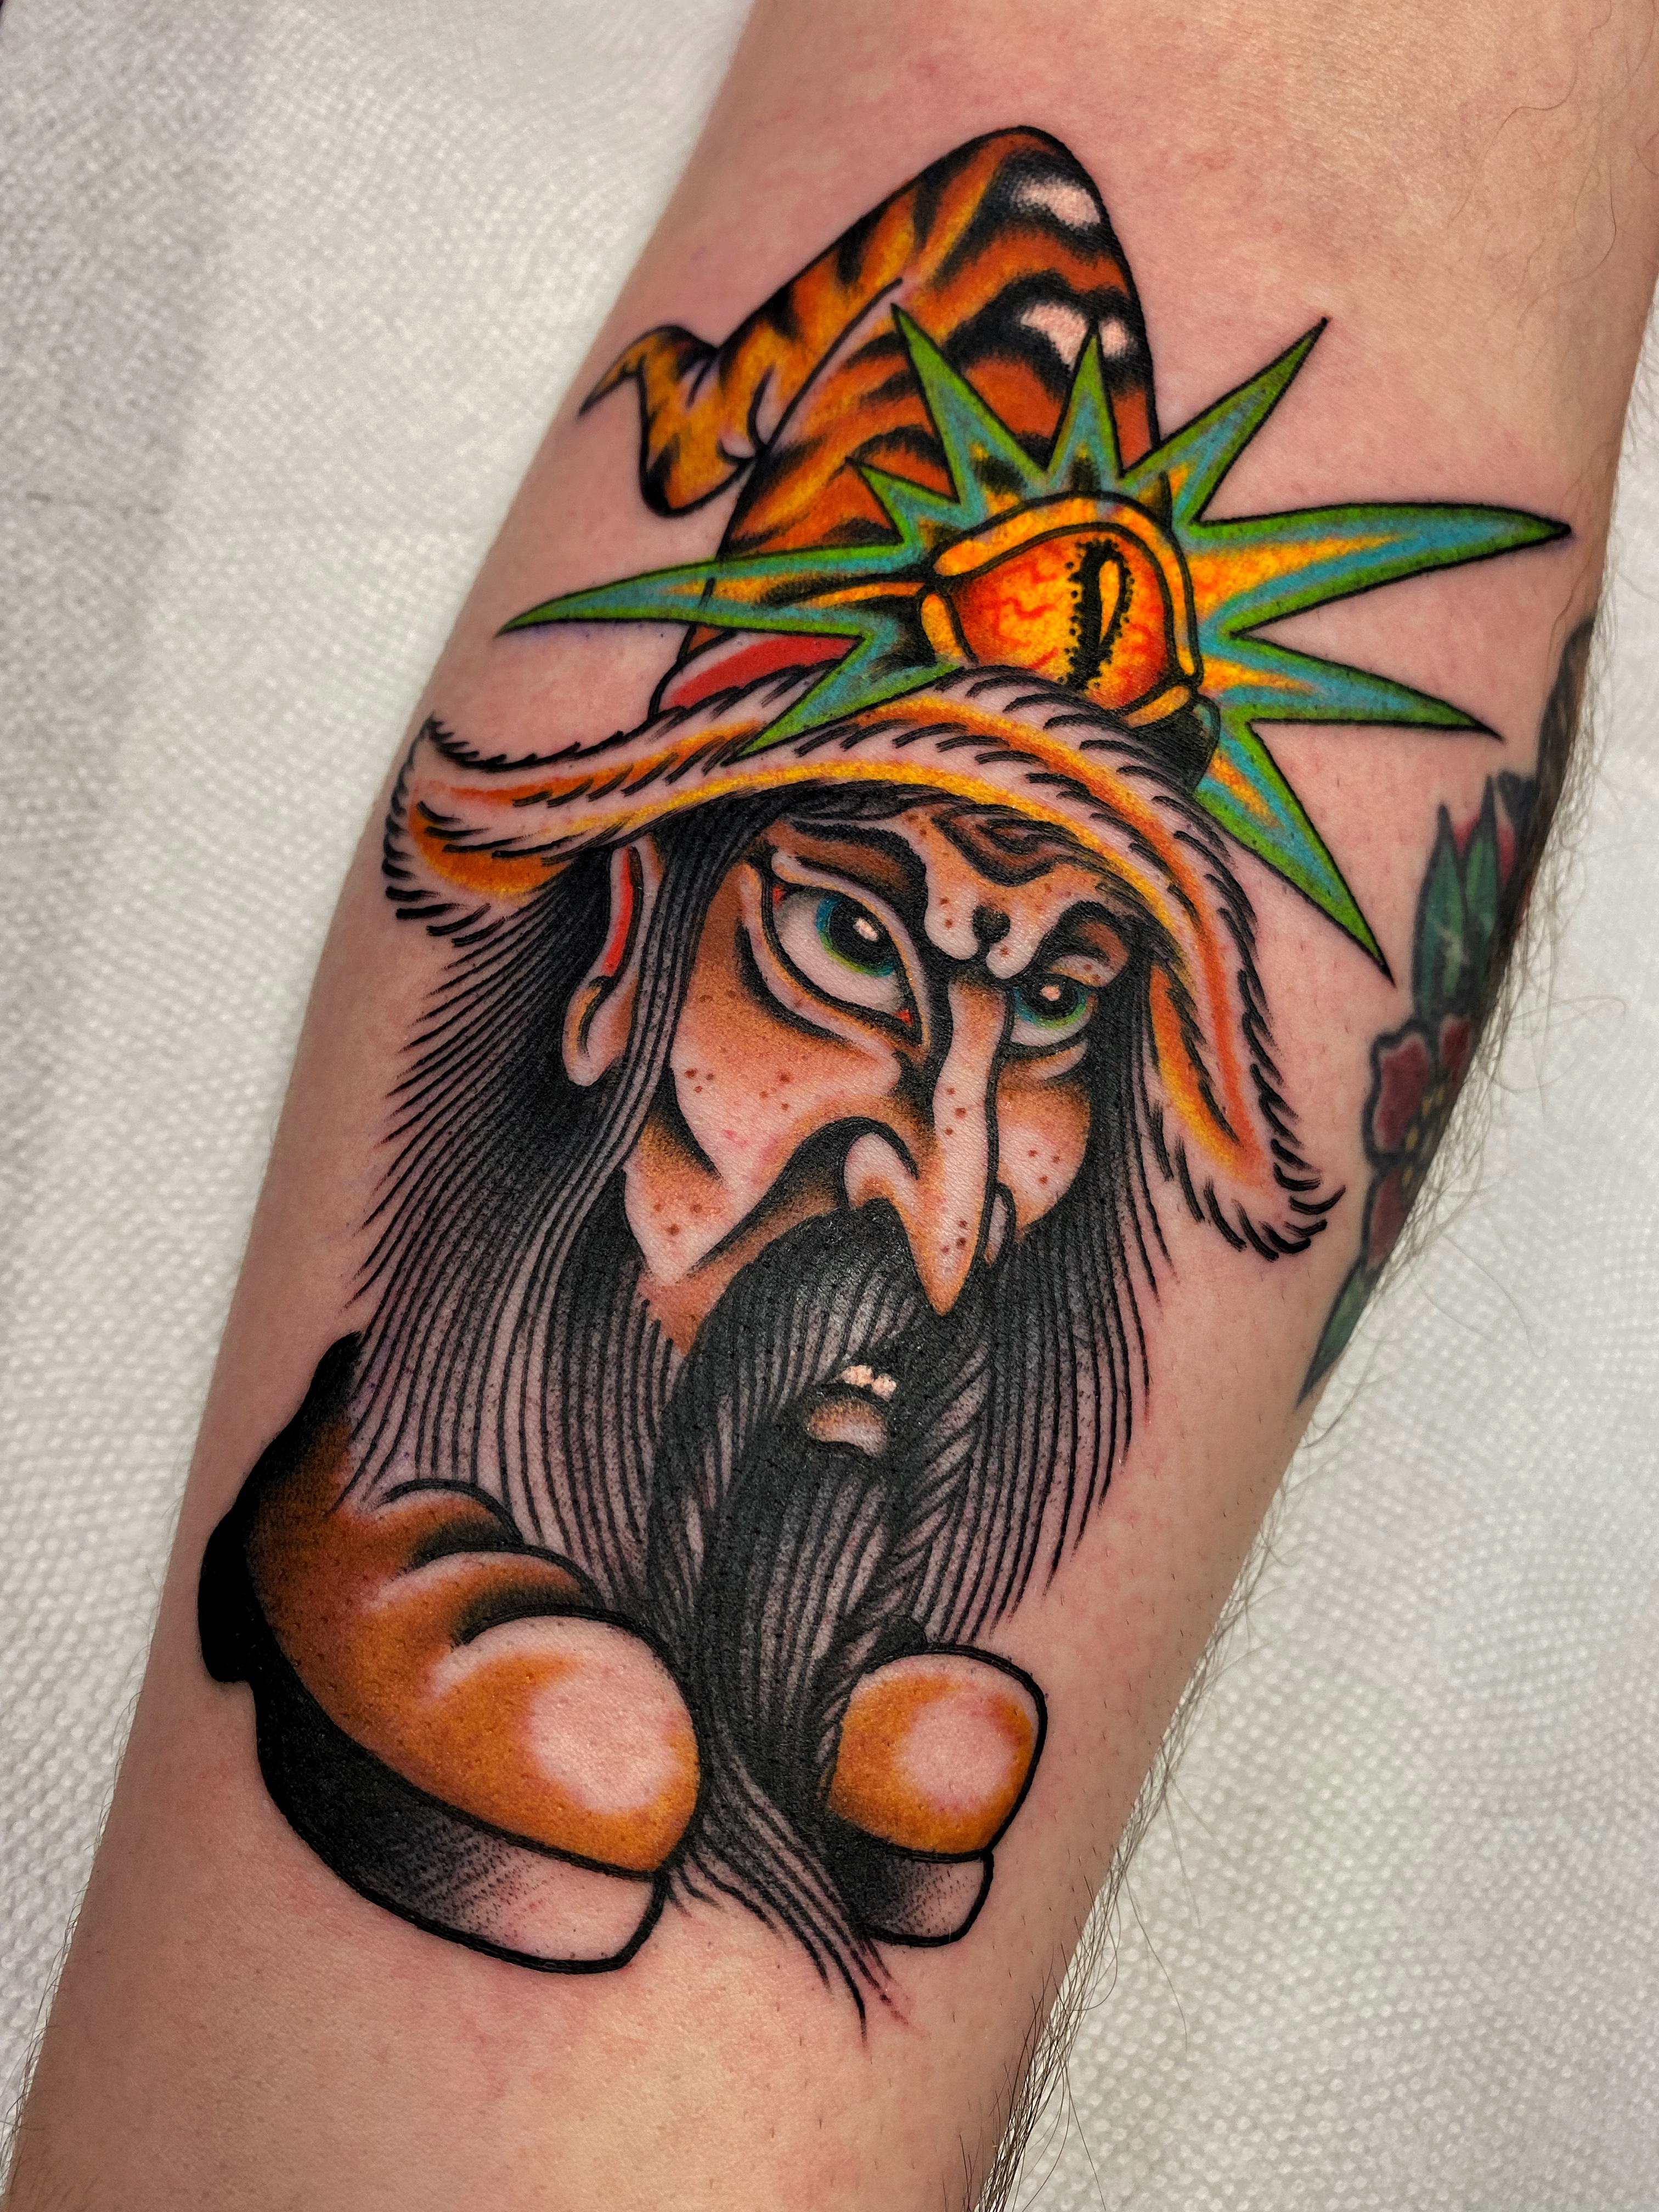 Sean Michel  Sundance Tattoo Parlor